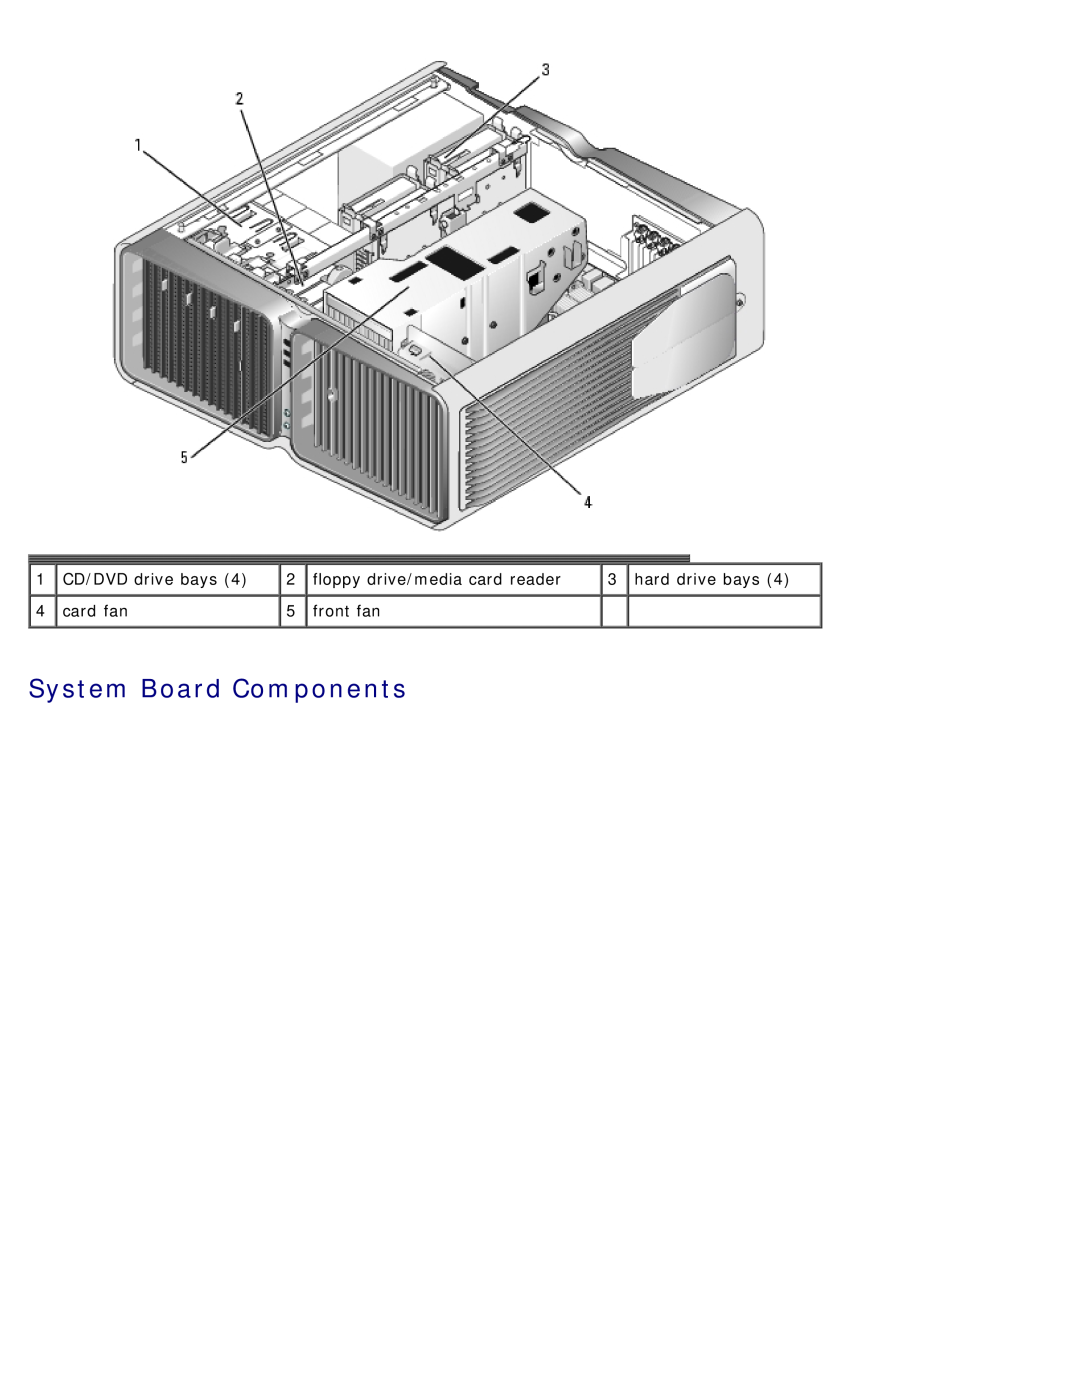 Dell DCDO System Board Components, CD/DVD drive bays, floppy drive/media card reader, hard drive bays, card fan, front fan 